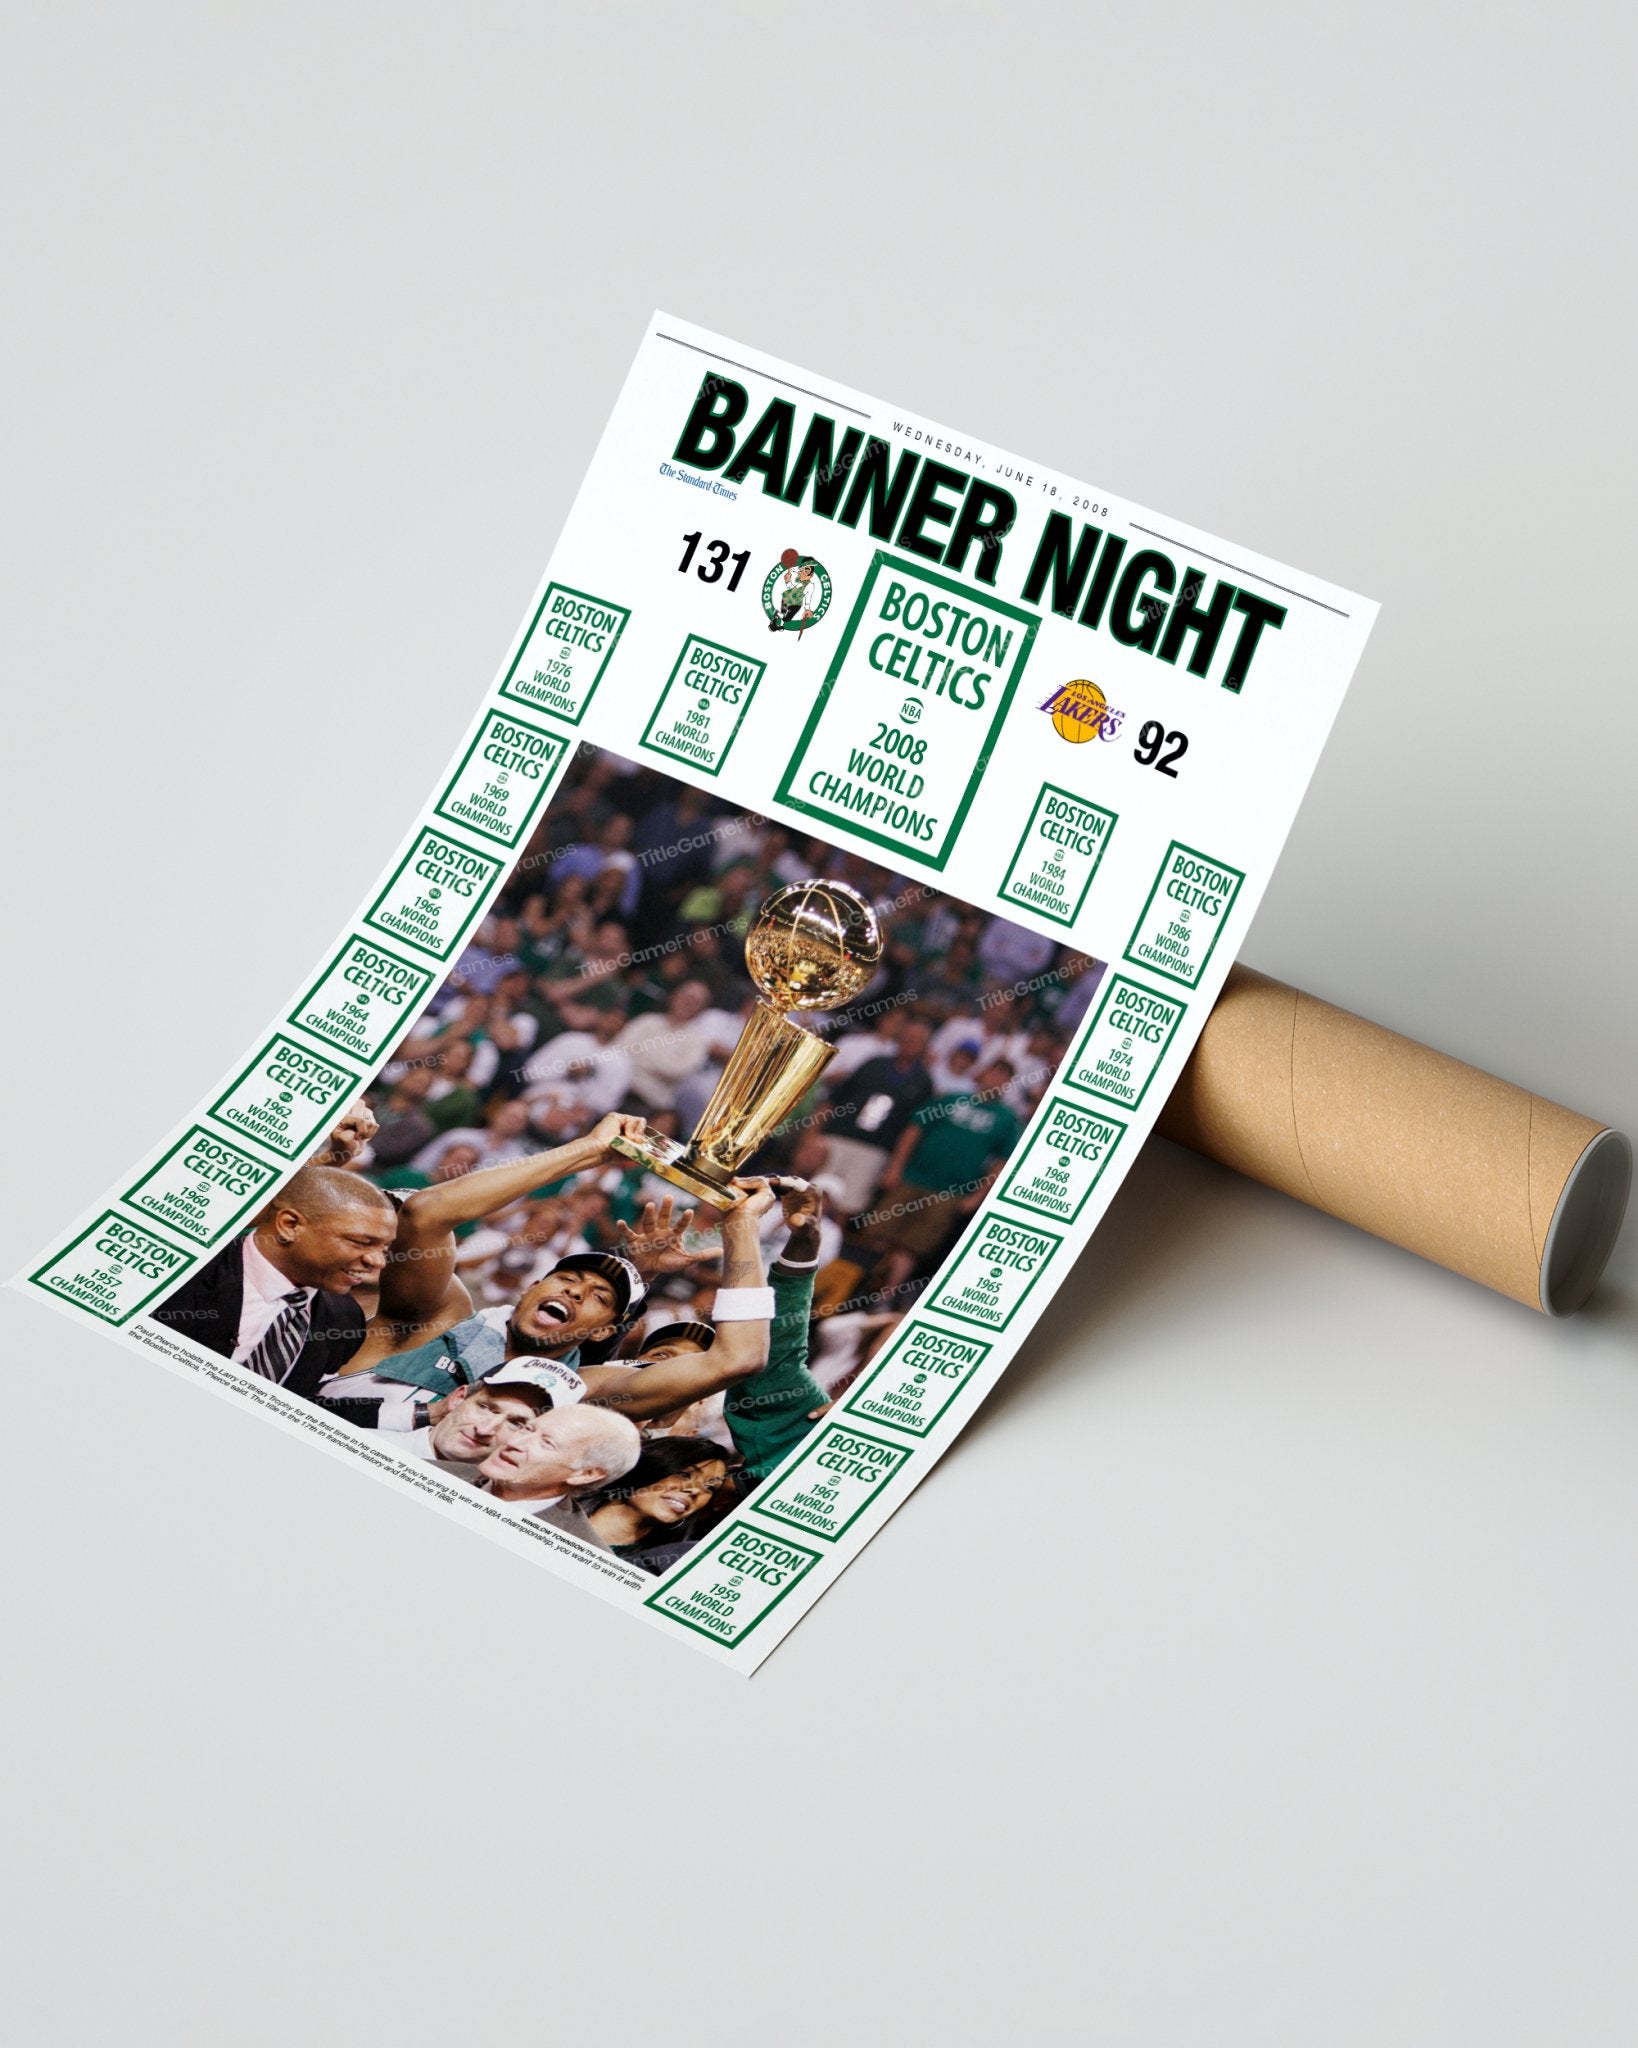 2008 Boston Celtics 'Banner Night' Framed Newspaper - NBA Finals Champions - Title Game Frames